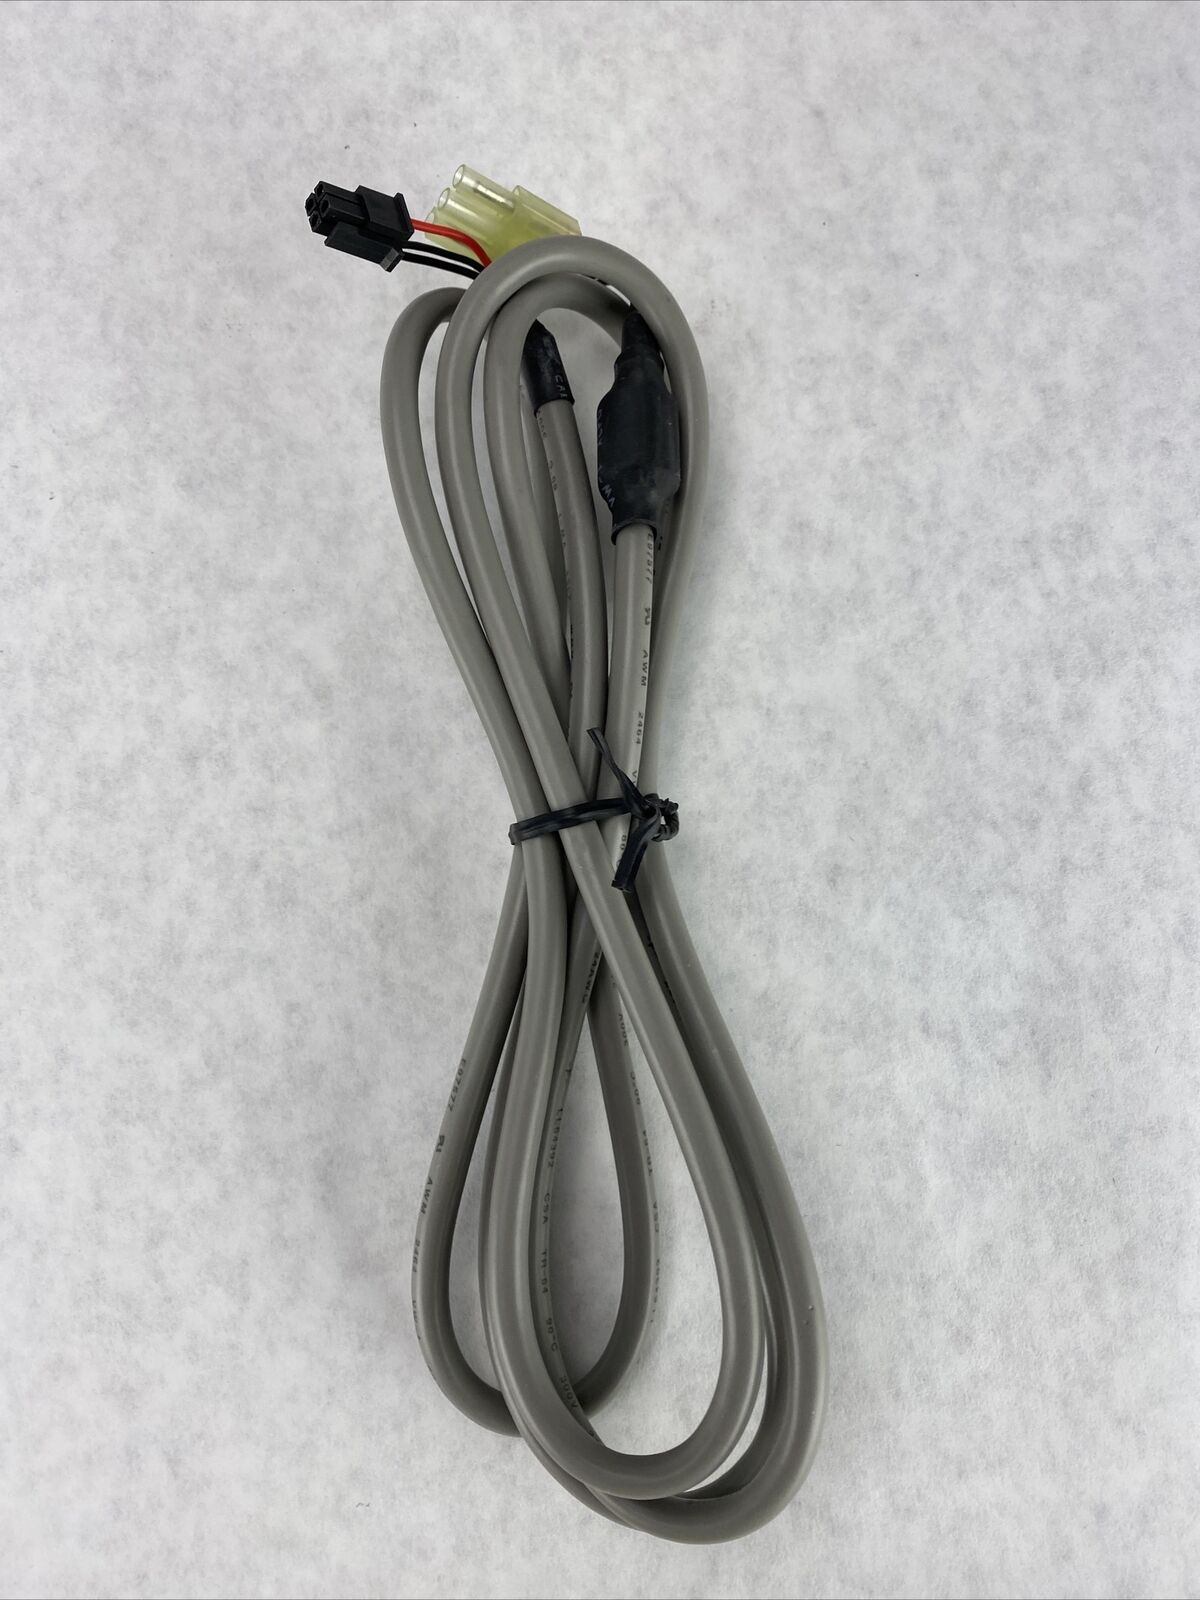 Aristocrat 434027-01 Power Cable 434003-01